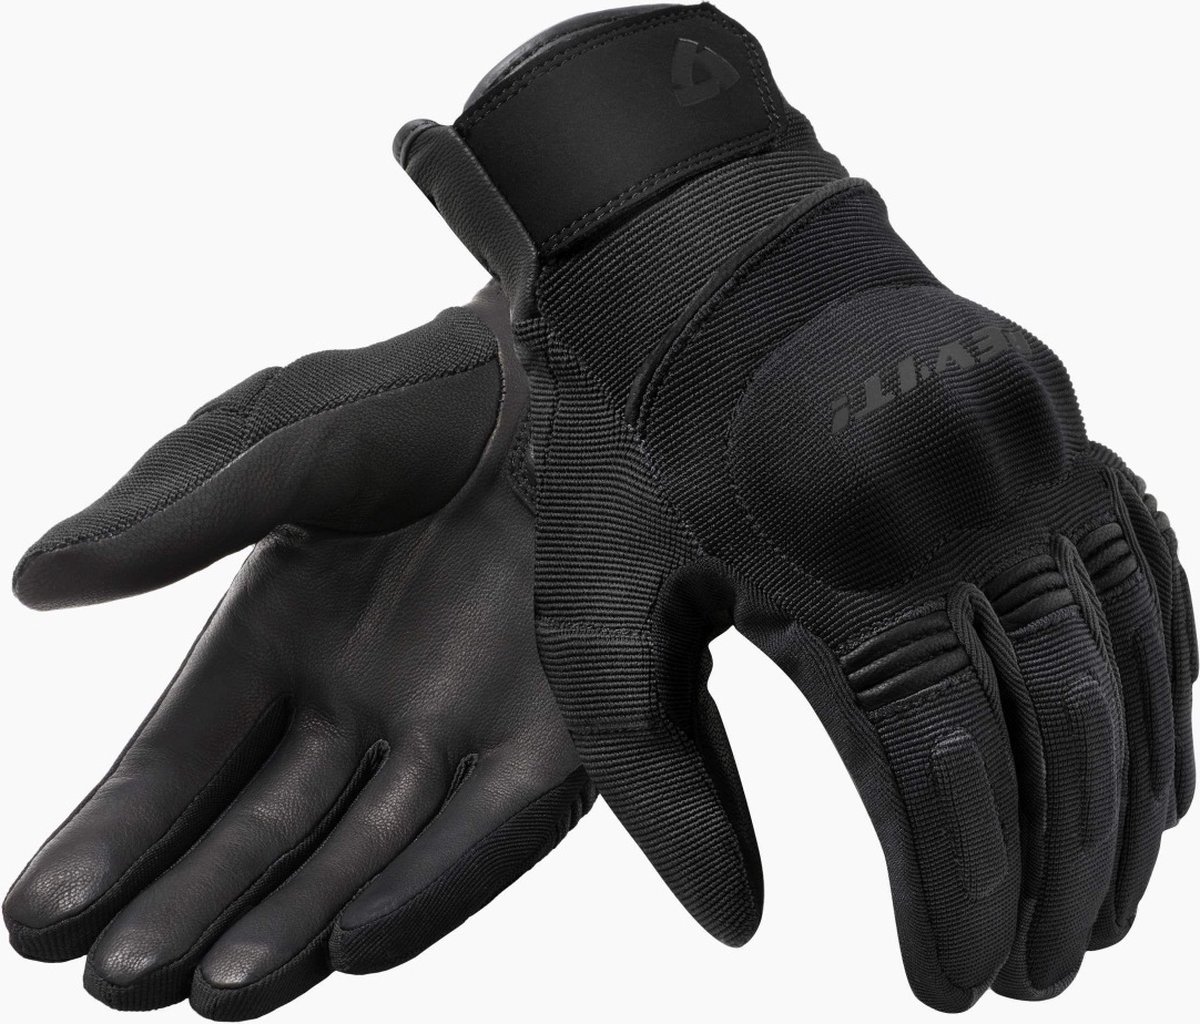 REV'IT! Mosca H2O Black Motorcycle Gloves XS - Maat XS - Handschoen